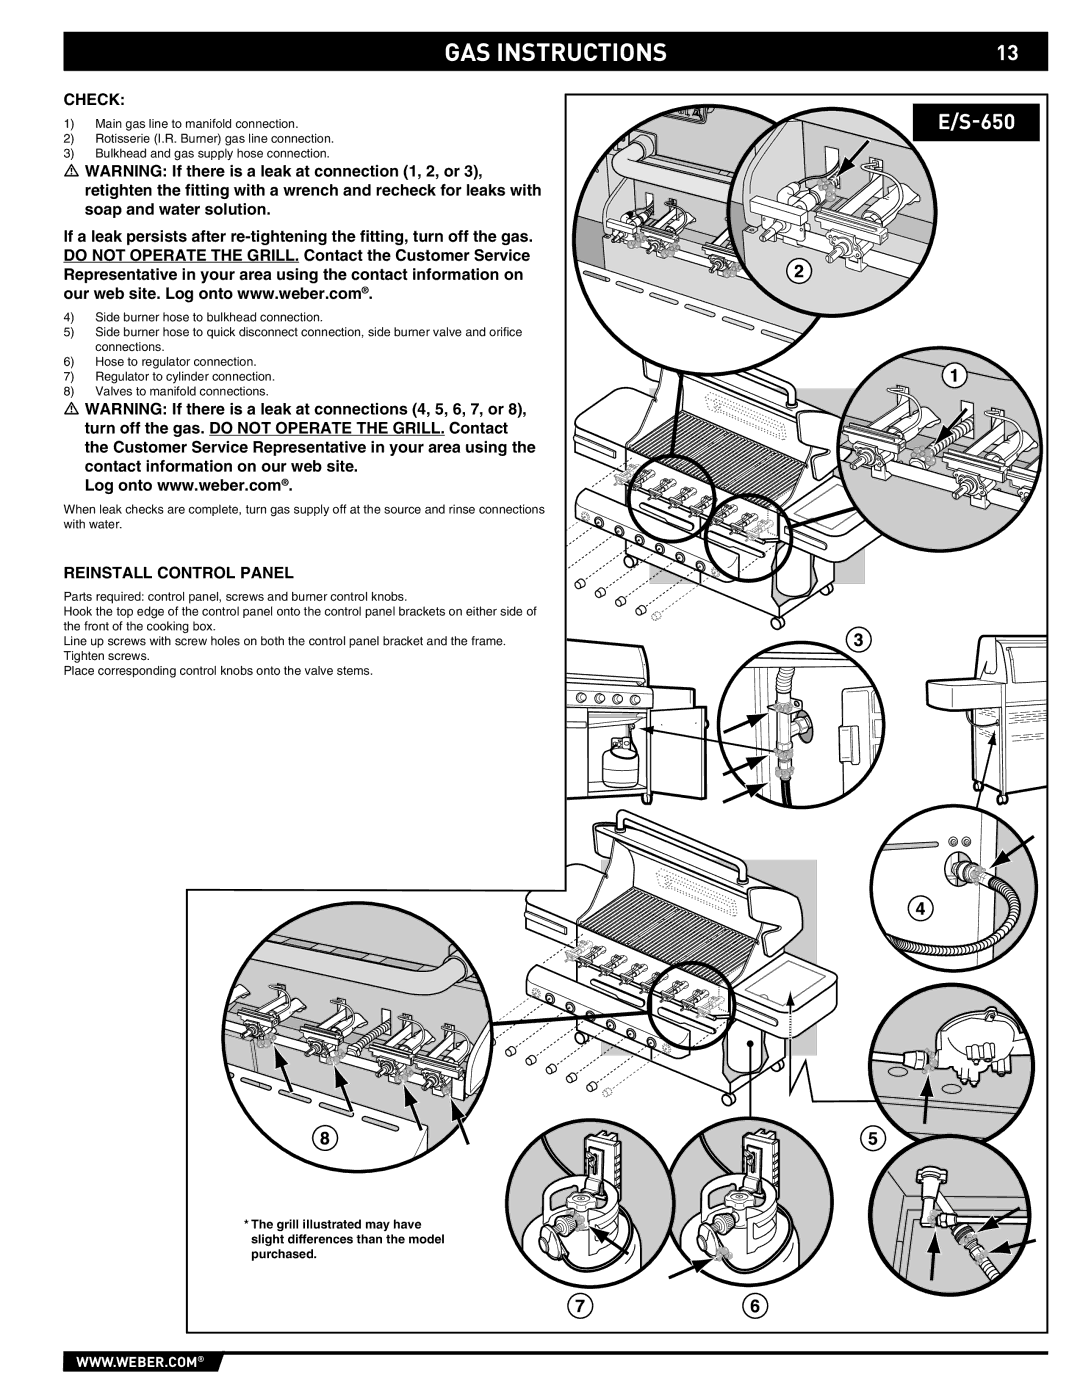 Summit E/S-620/650 manual Check, Reinstall Control Panel 